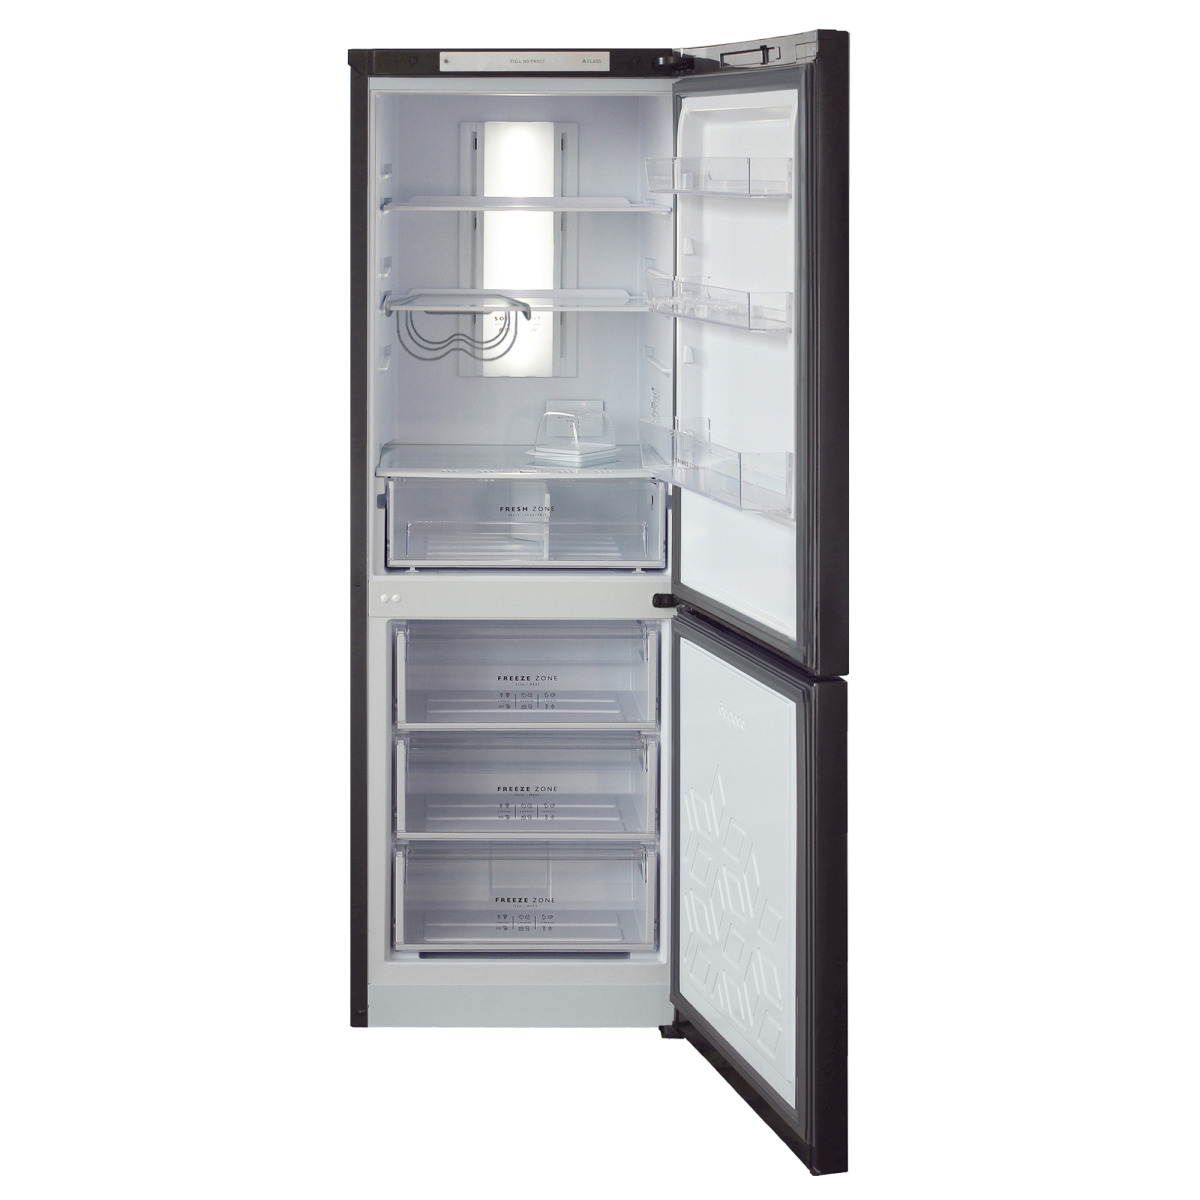 Бирюса W 920 NF Холодильник - уменьшенная 7